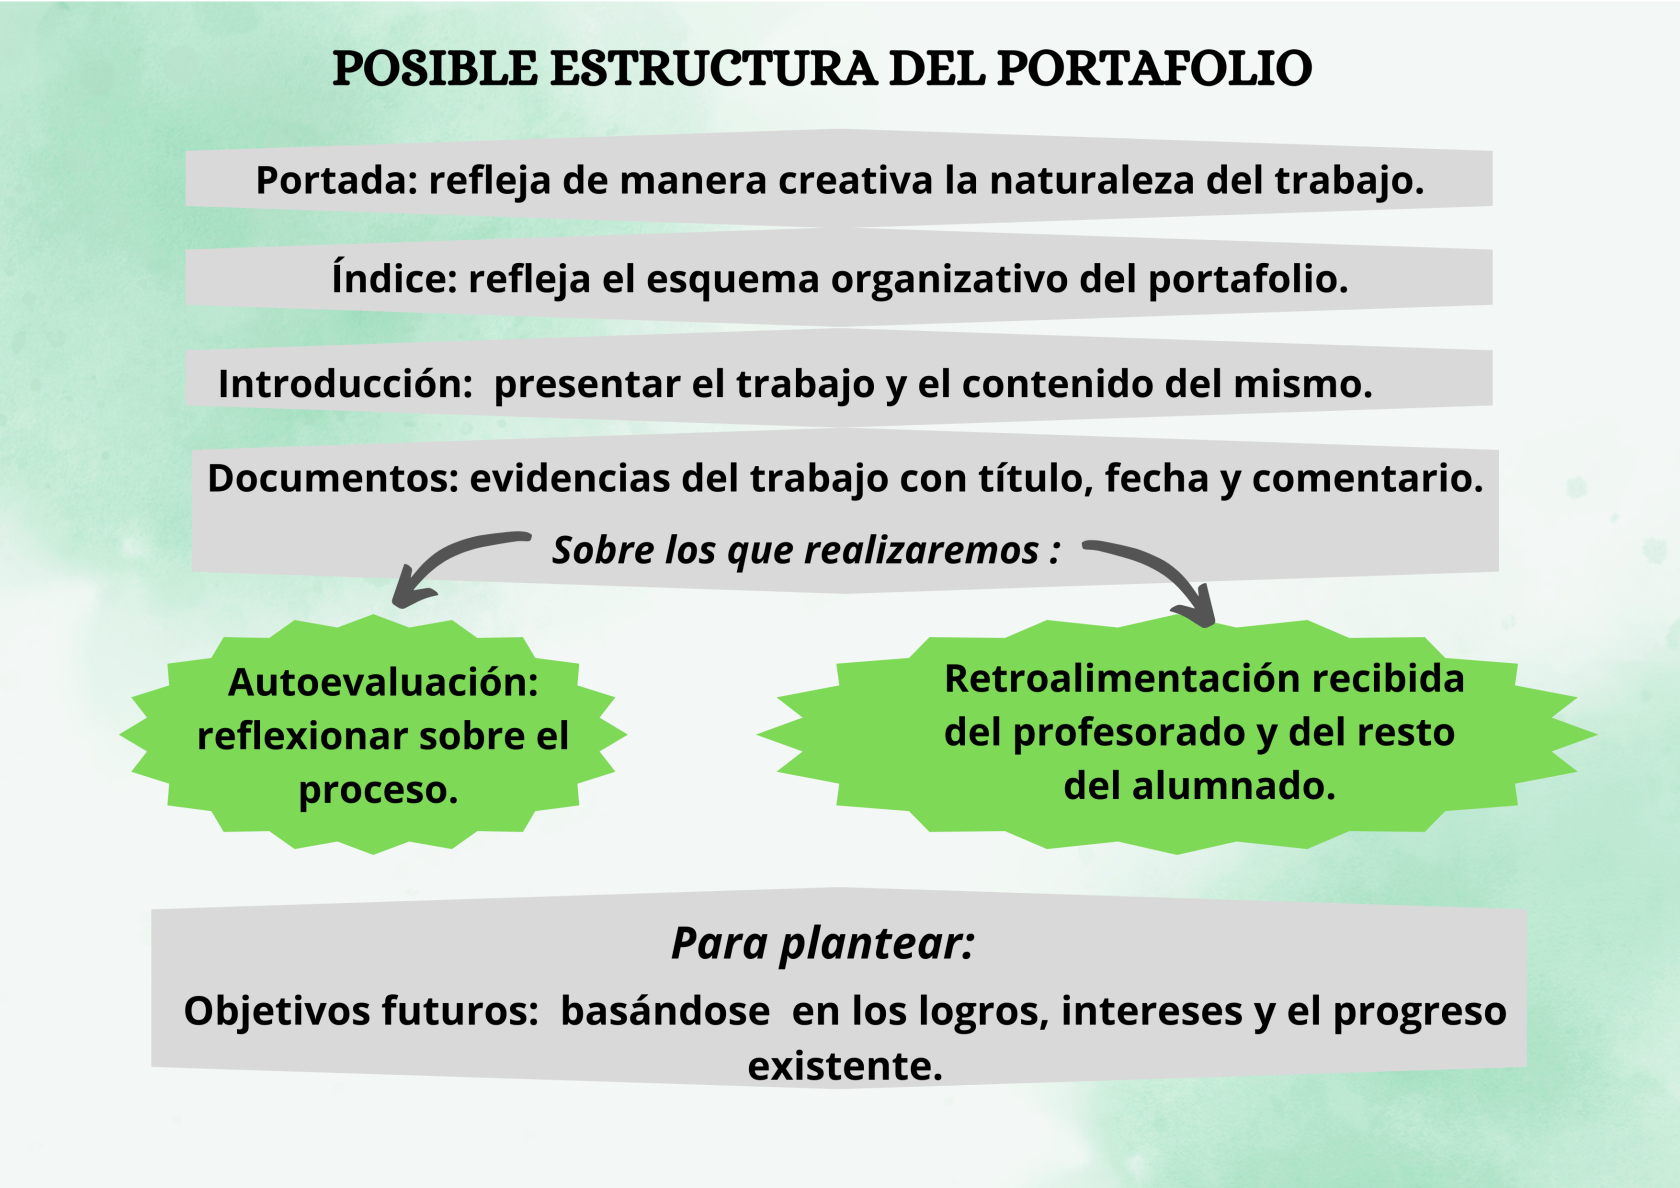 Estructura del Portafolio.png